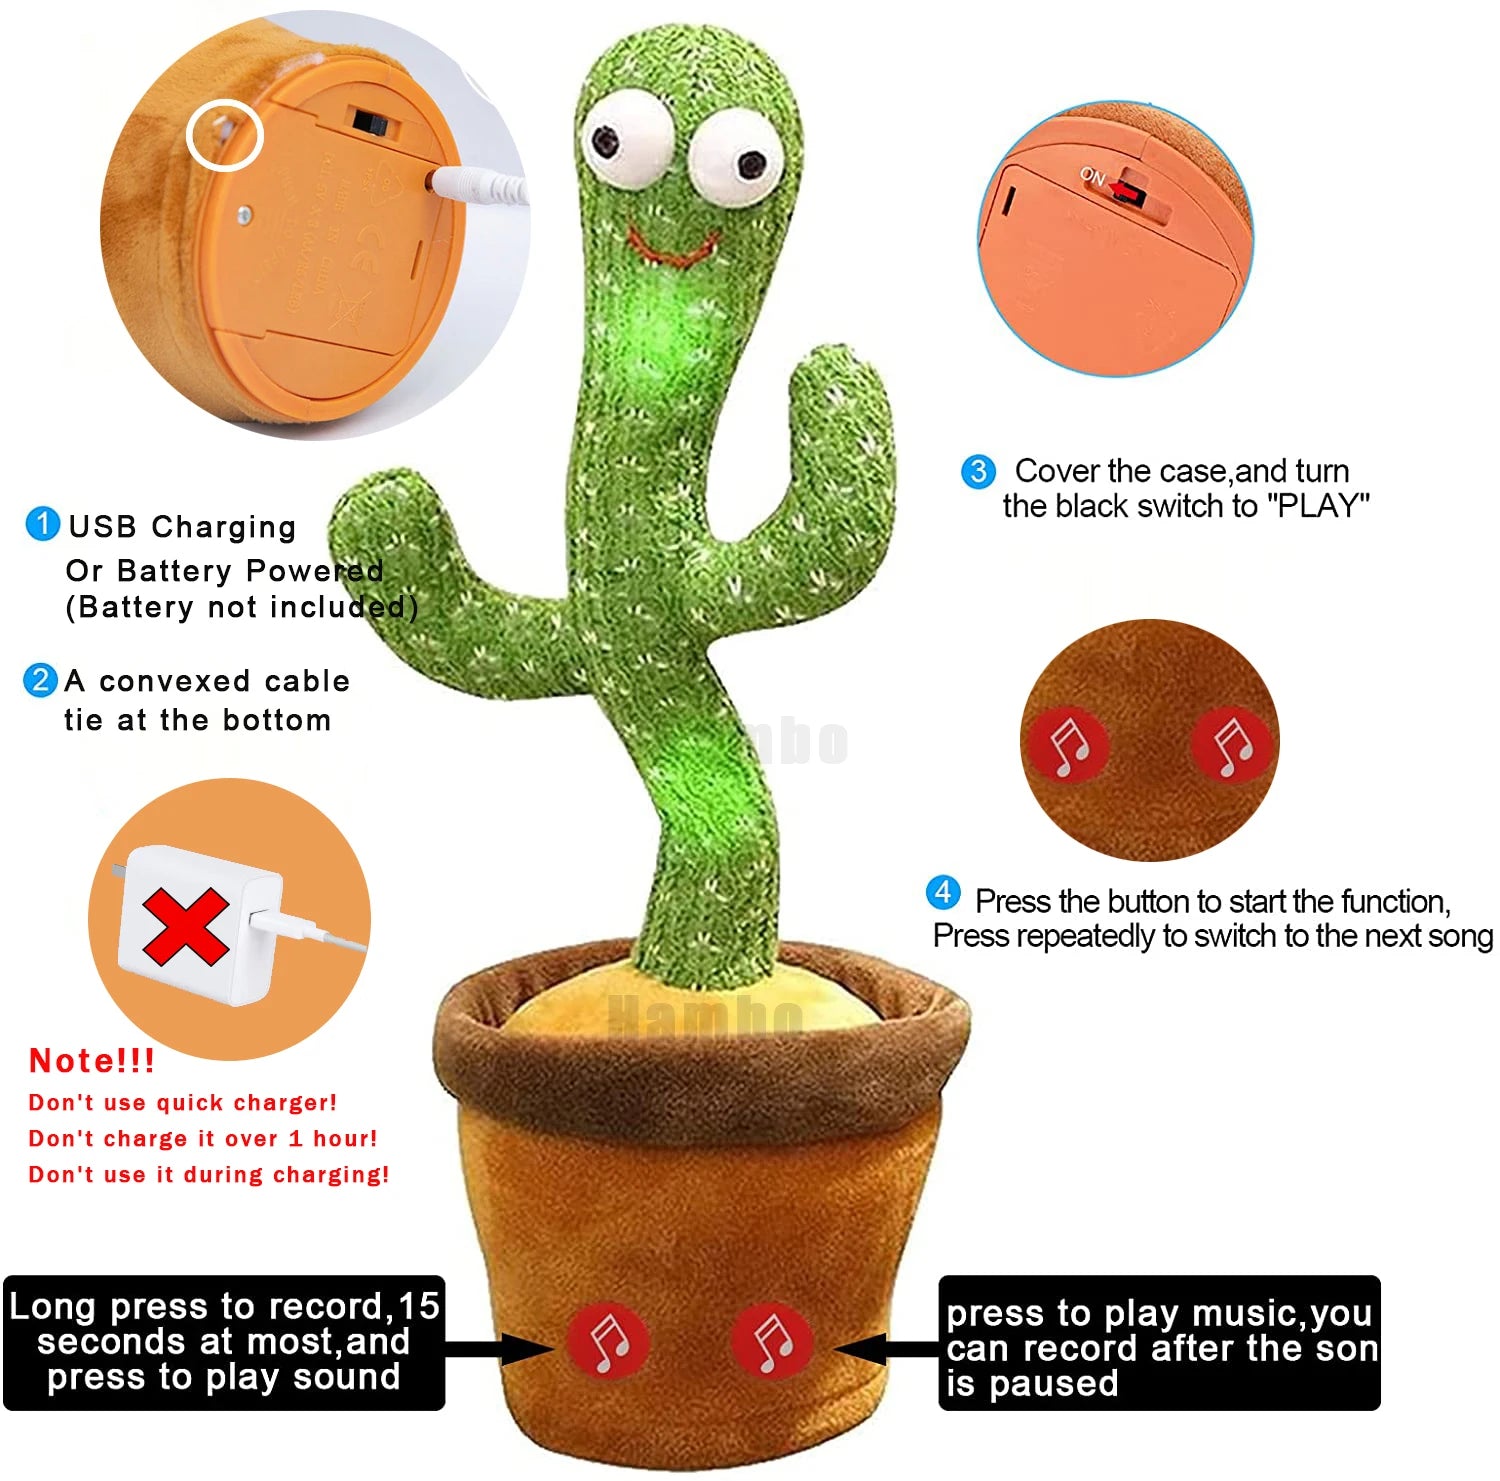 Dancing Cactus Toy: Twisting, Singing, Glowing Fun for Kids  petlums.com   